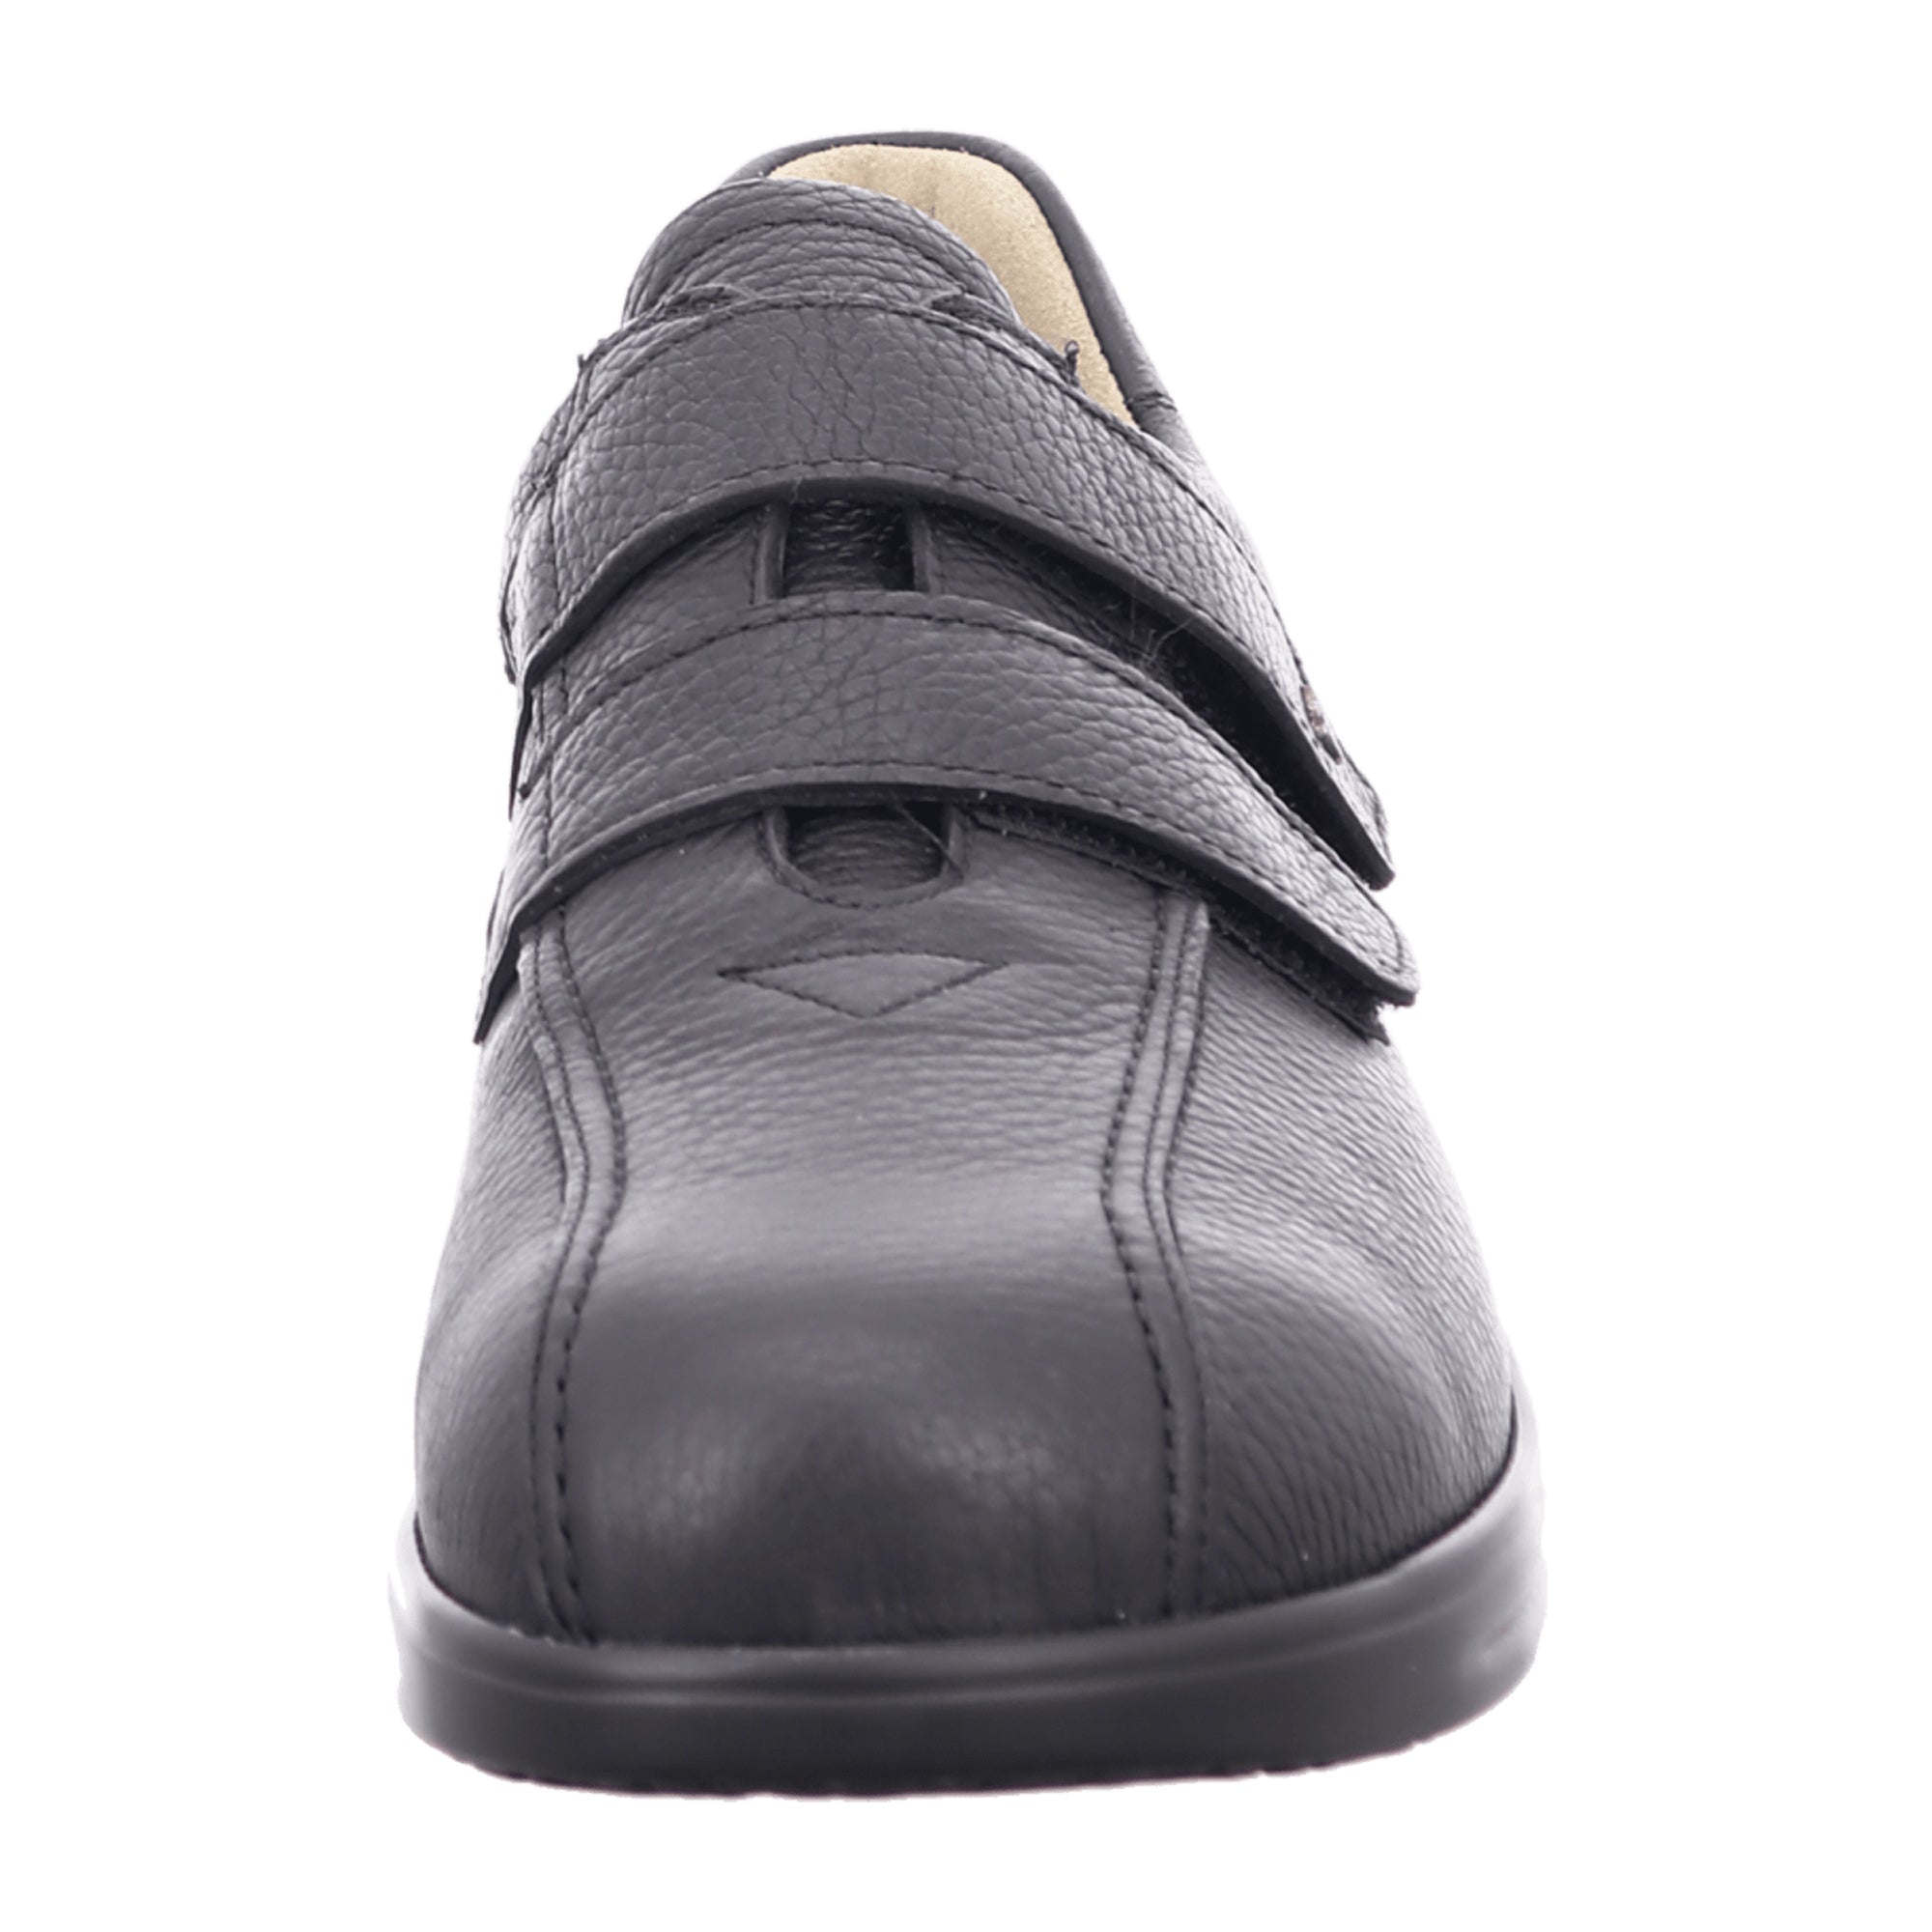 Finn Comfort Cambridge Men's Orthopedic Dress Shoes - Elegant Black Leather